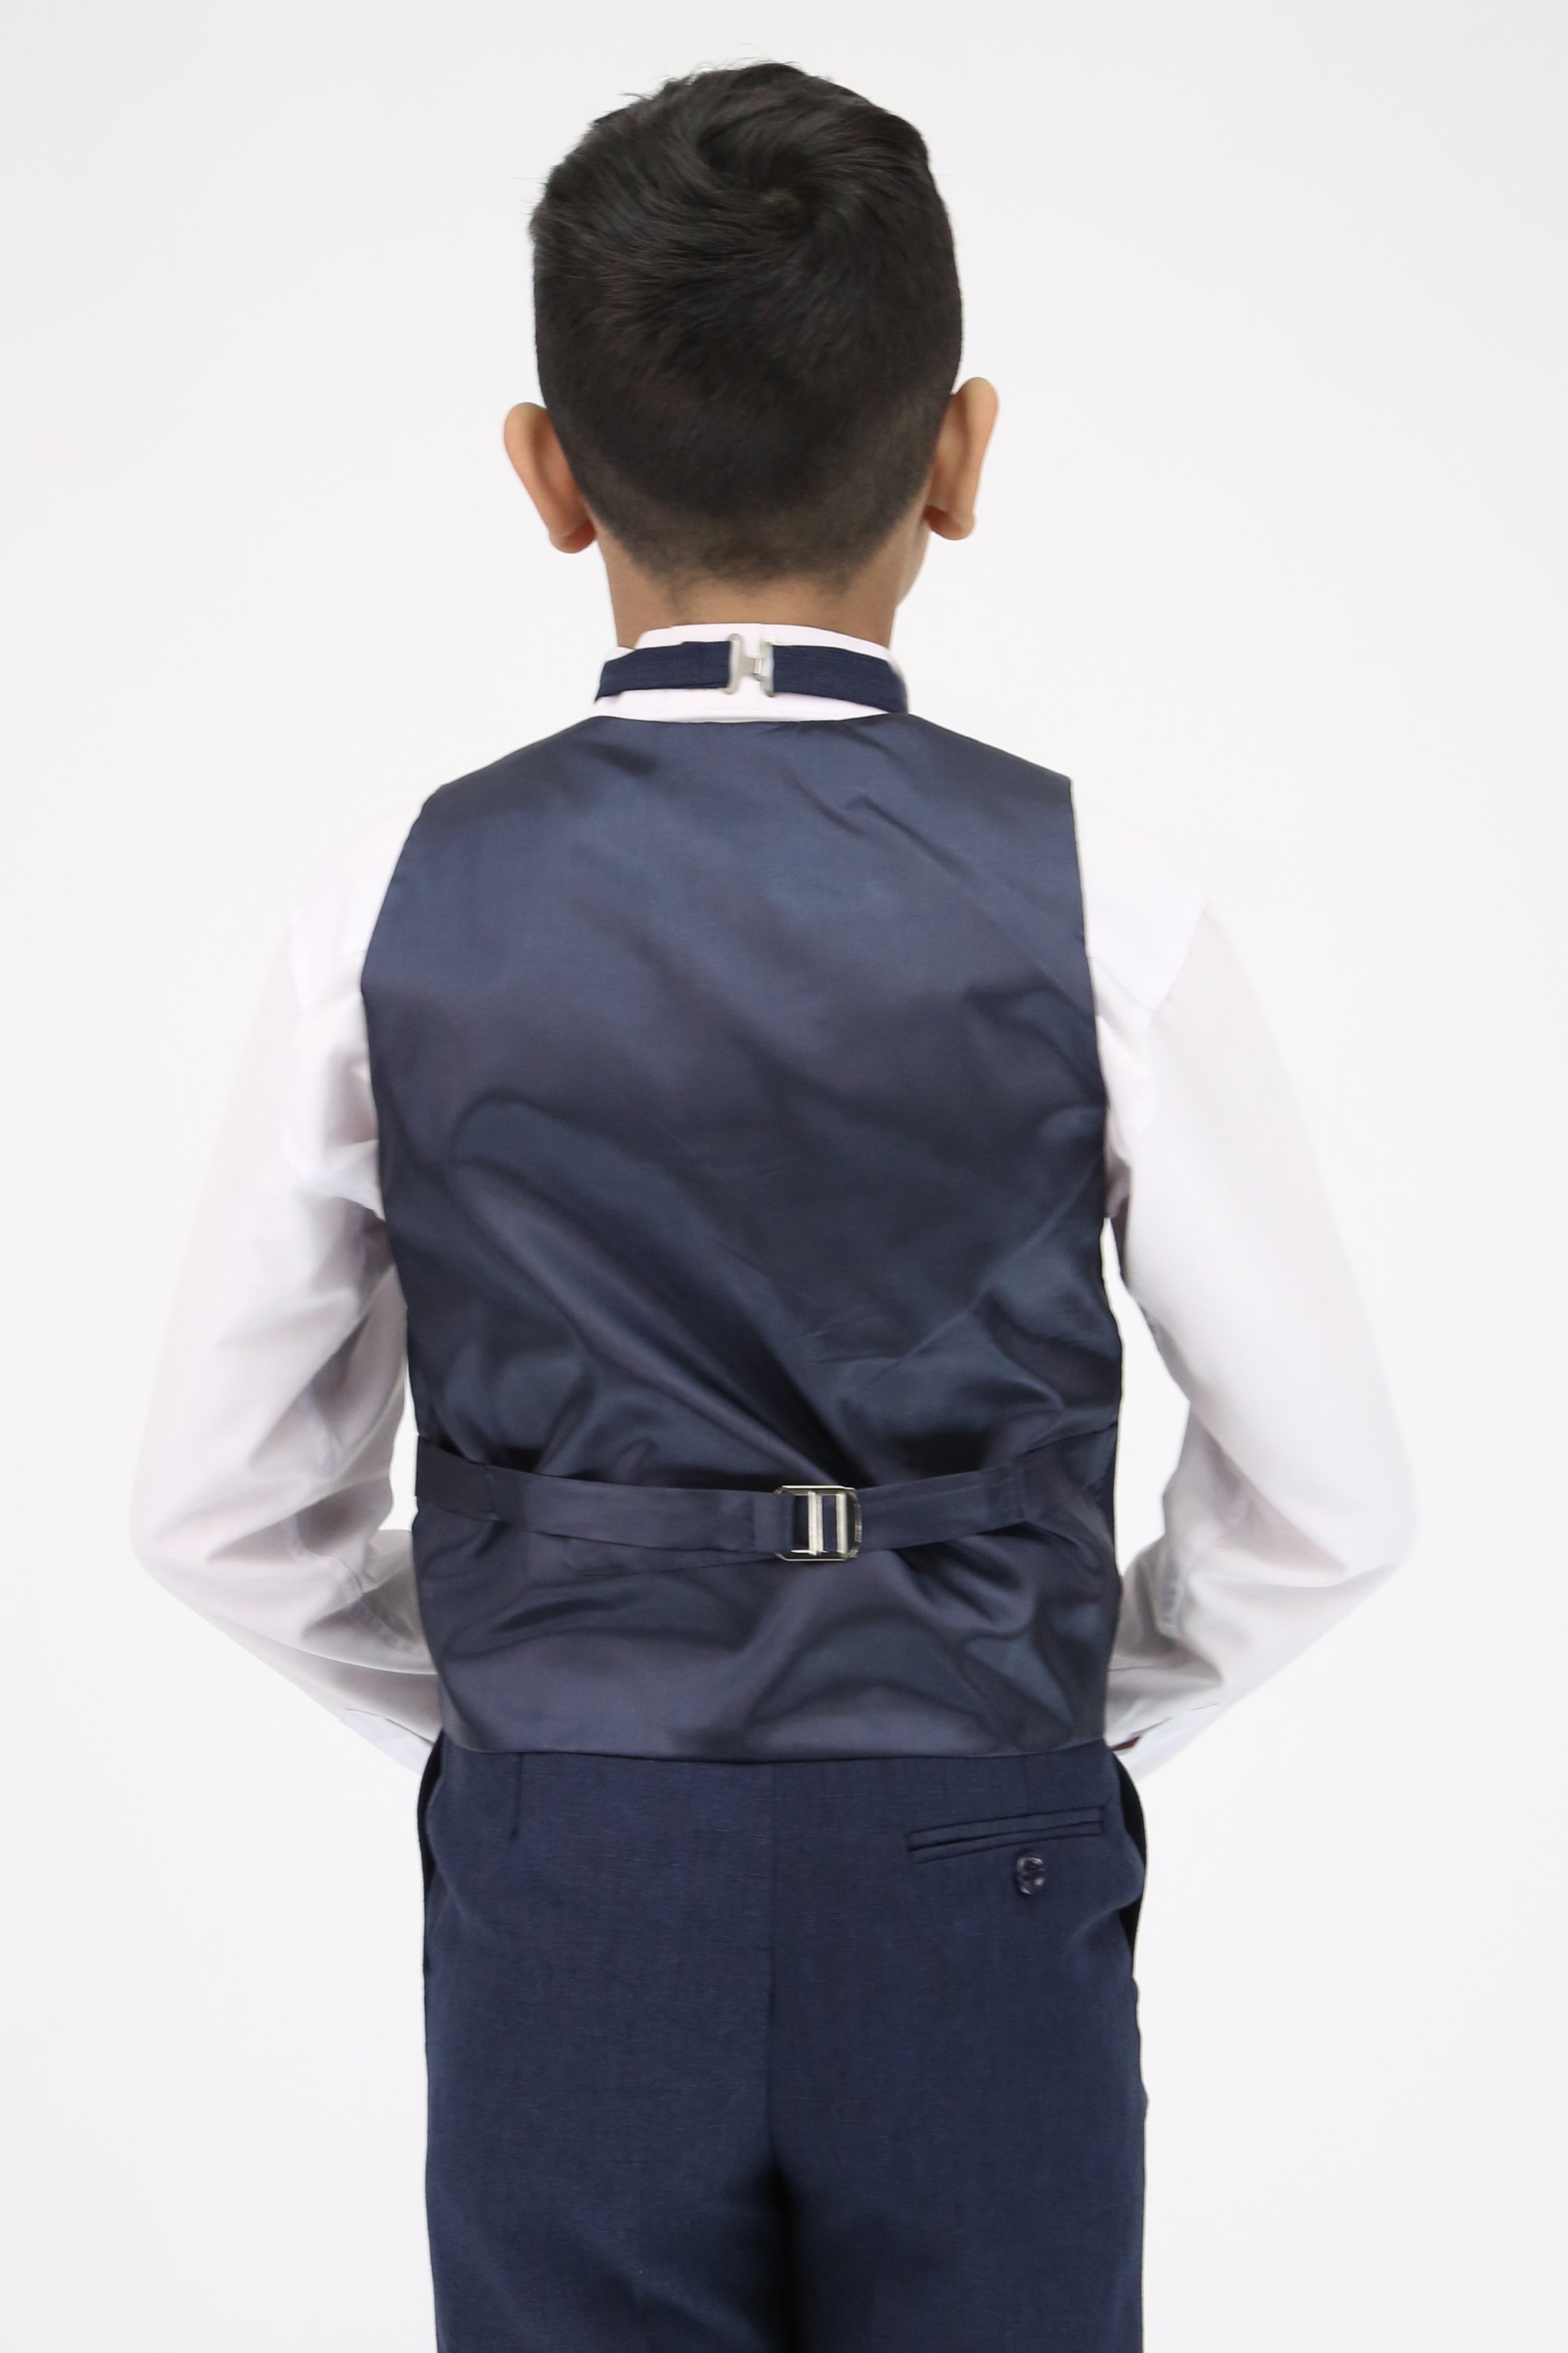 Boys Slim Fit Textured 6-Piece Formal Suit Set - Navy Blue